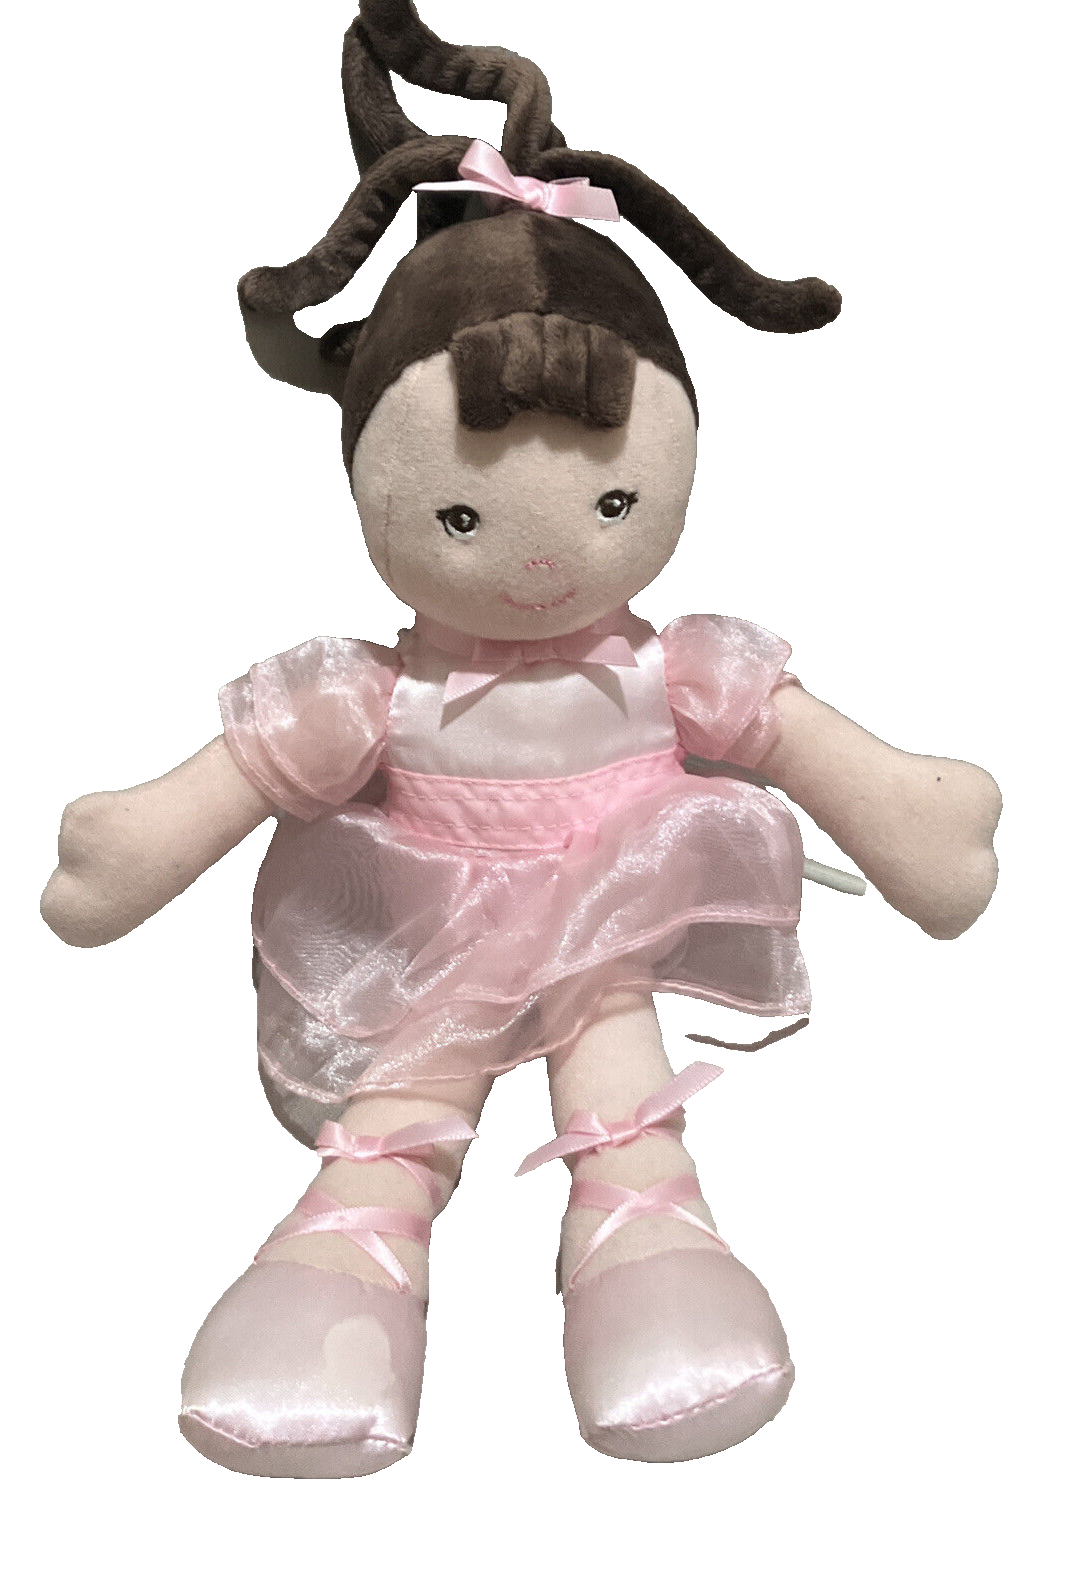 Garanimals Ballerina Pink Doll Plush Satin Shoes Tutu Bow Brown Hair 12 inch - $10.85